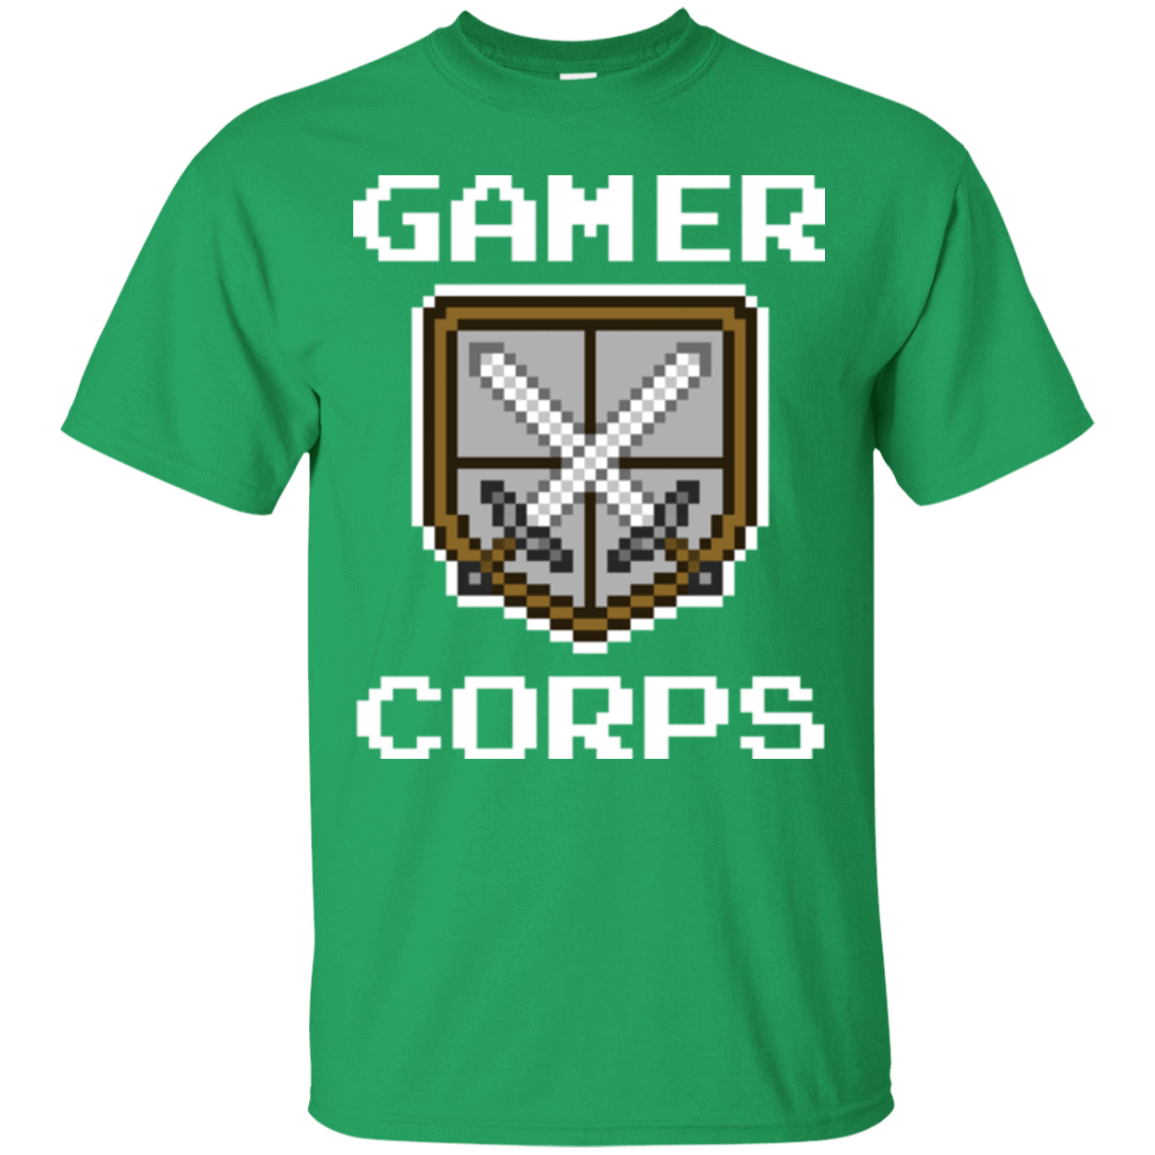 T-Shirts Irish Green / Small Gamer corps T-Shirt